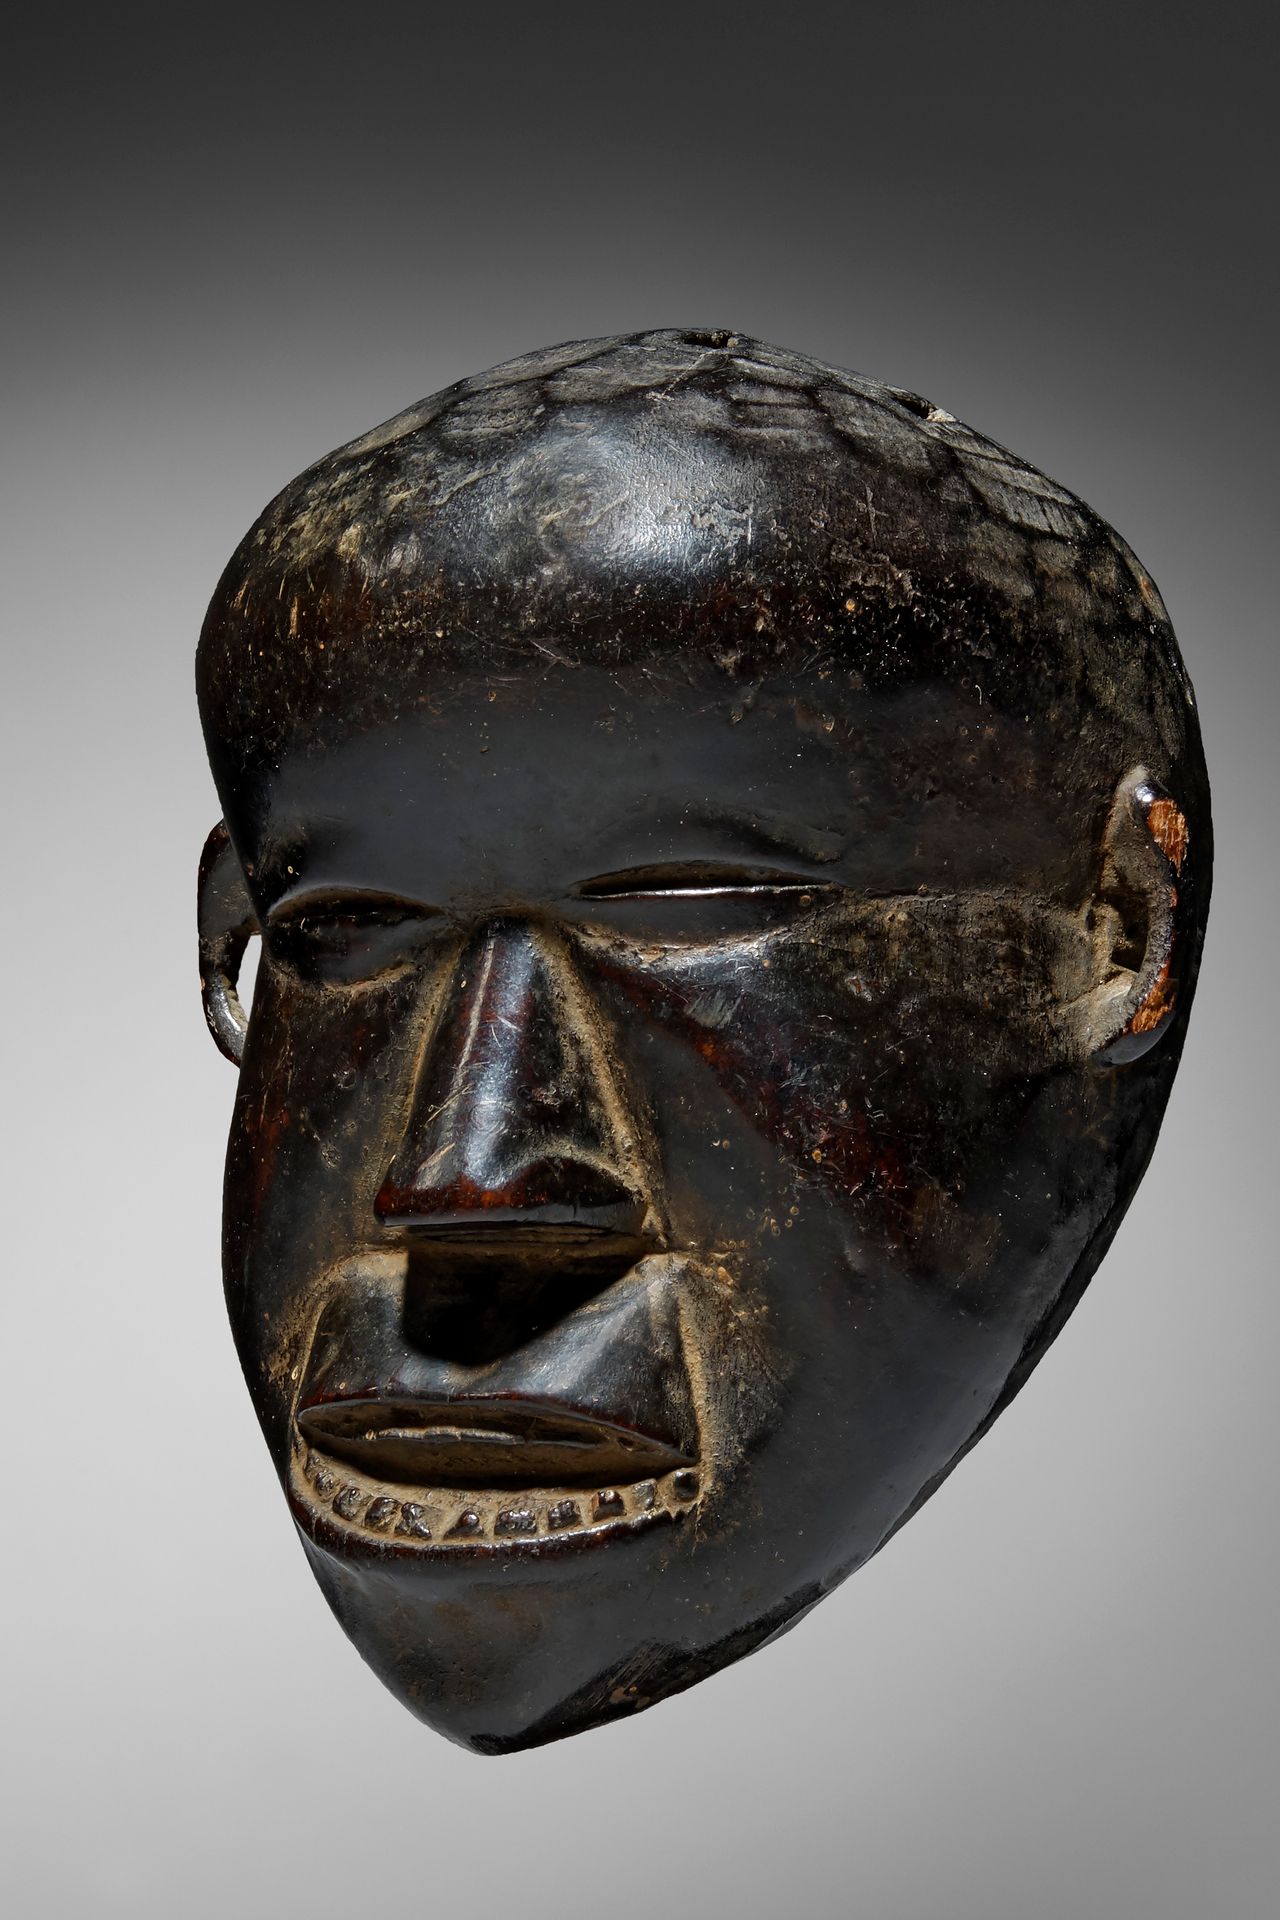 Dan Mano Pasport Mask Liberia

Holz - 13,5 cm

Herkunft:

Private Sammlung, Fran&hellip;